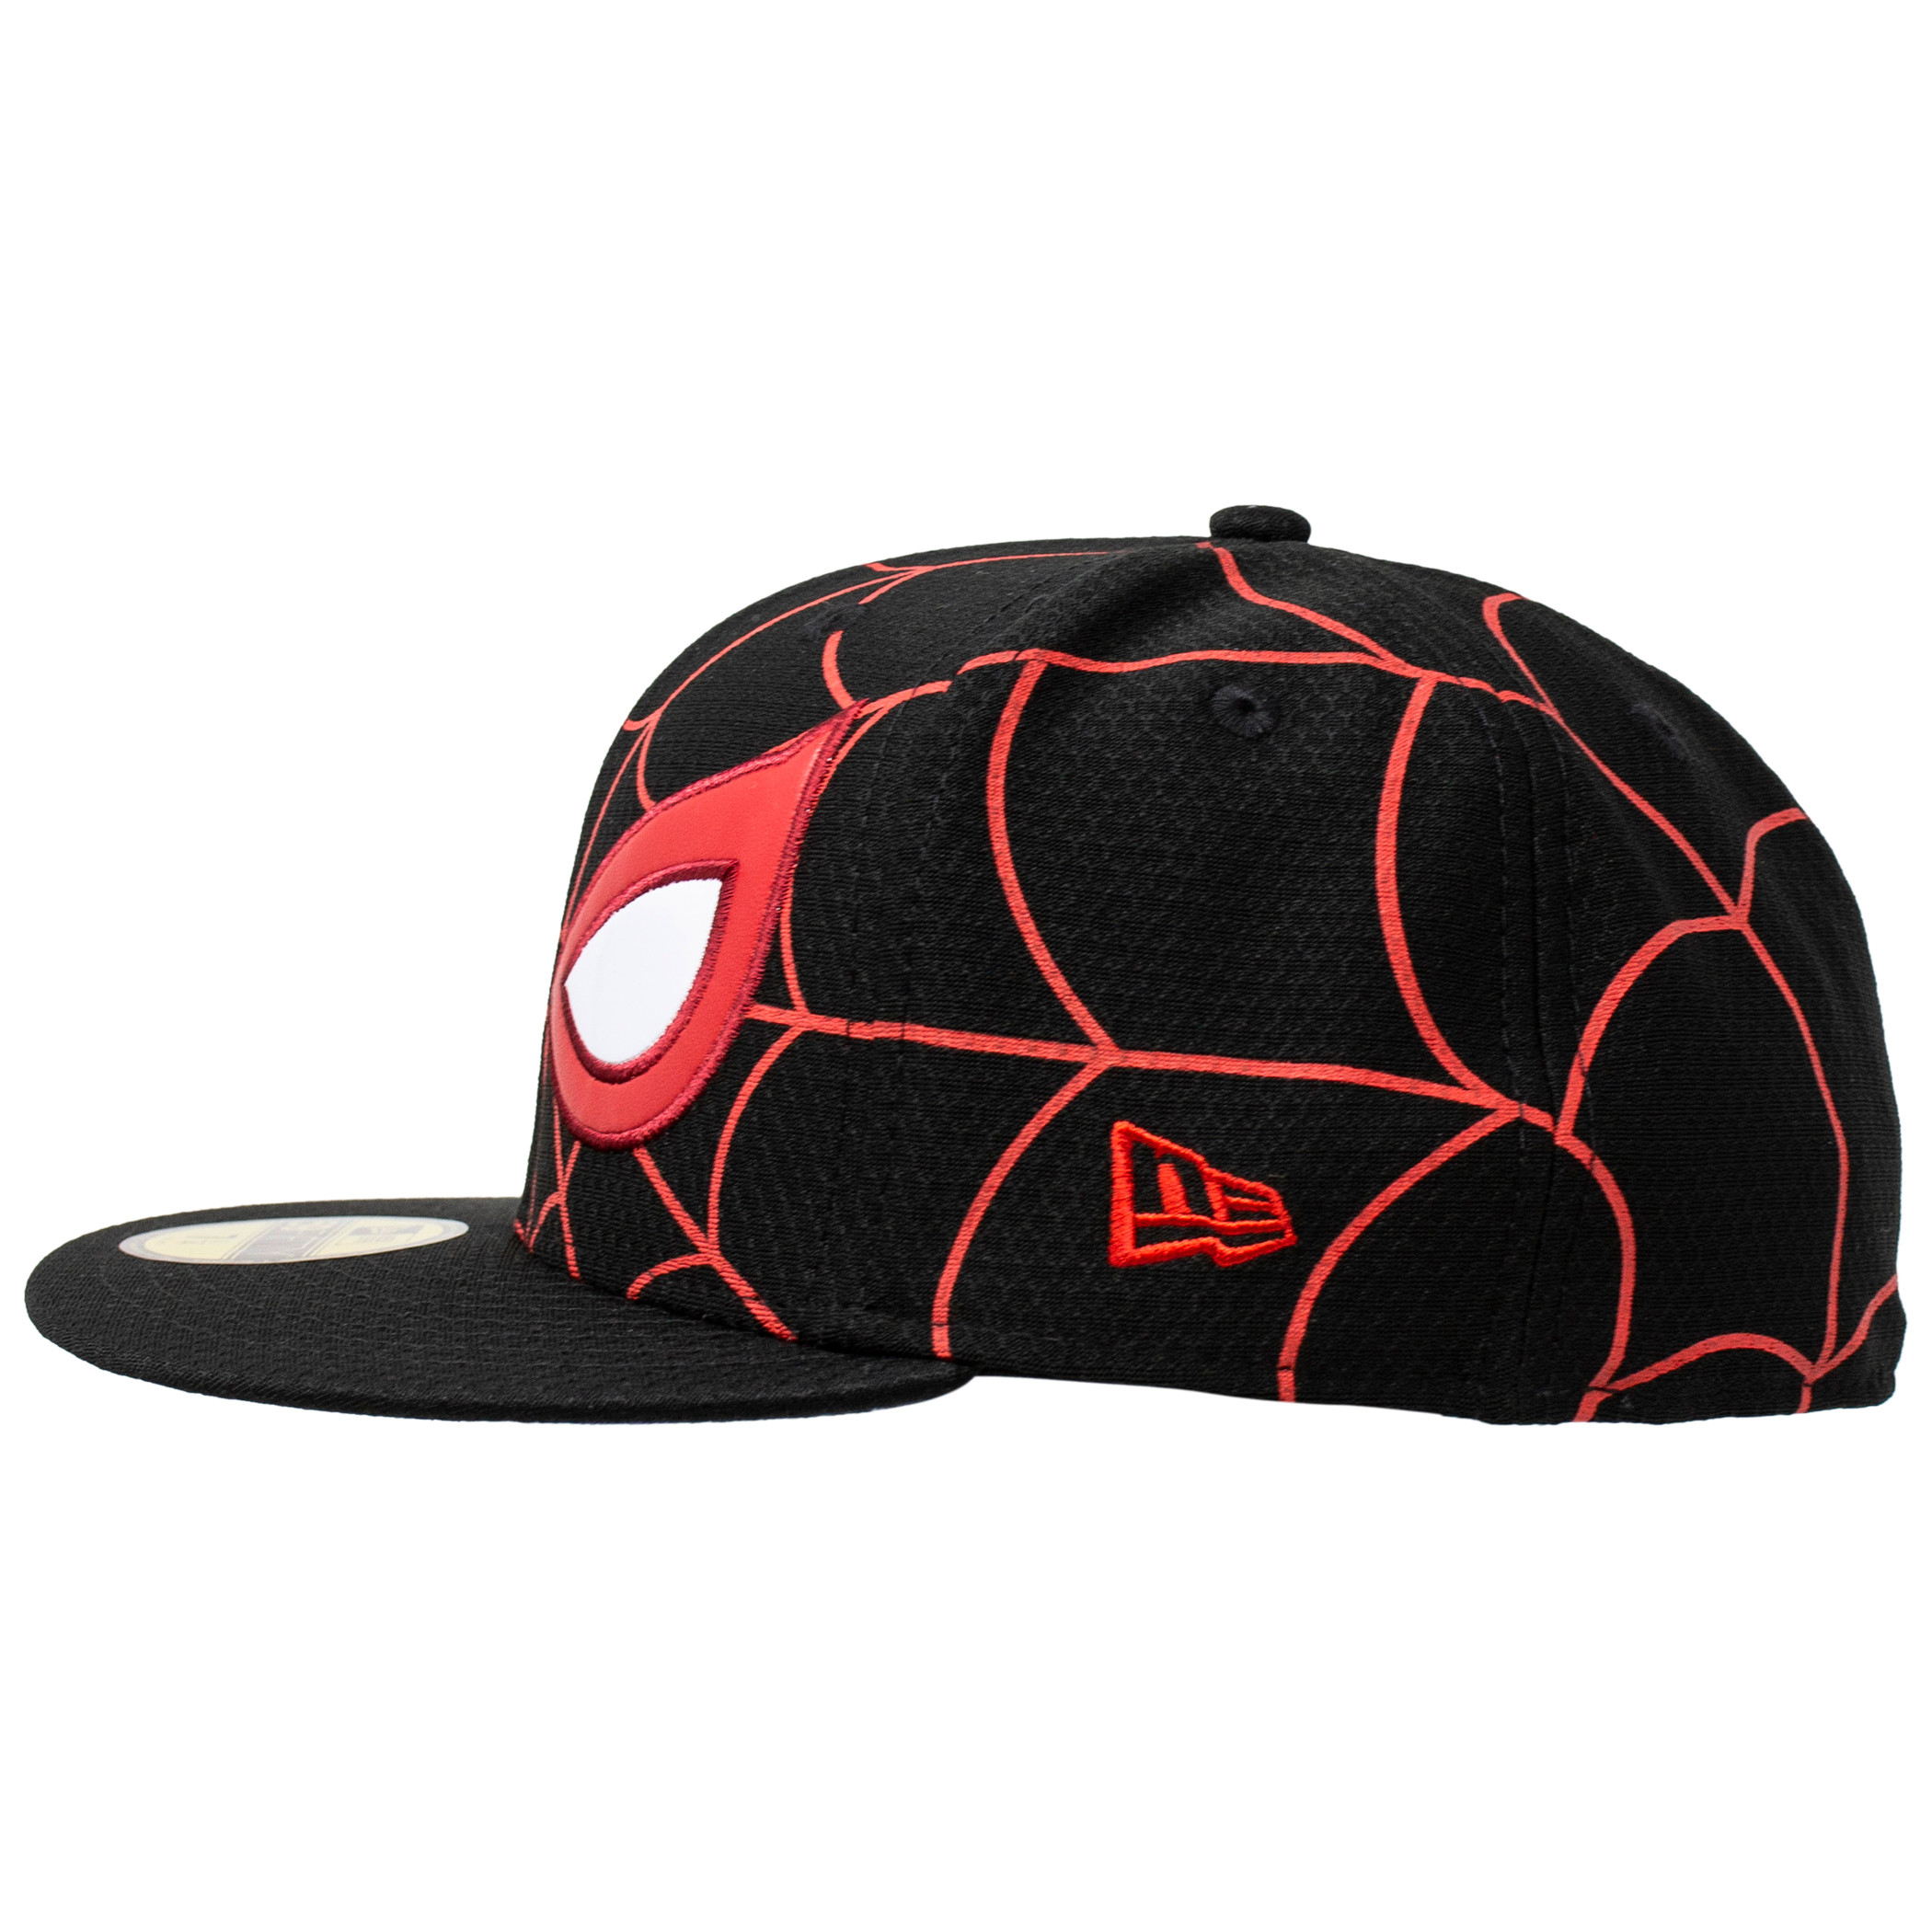 Miles Morales Spider-Man New Era 59Fifty Hat Black